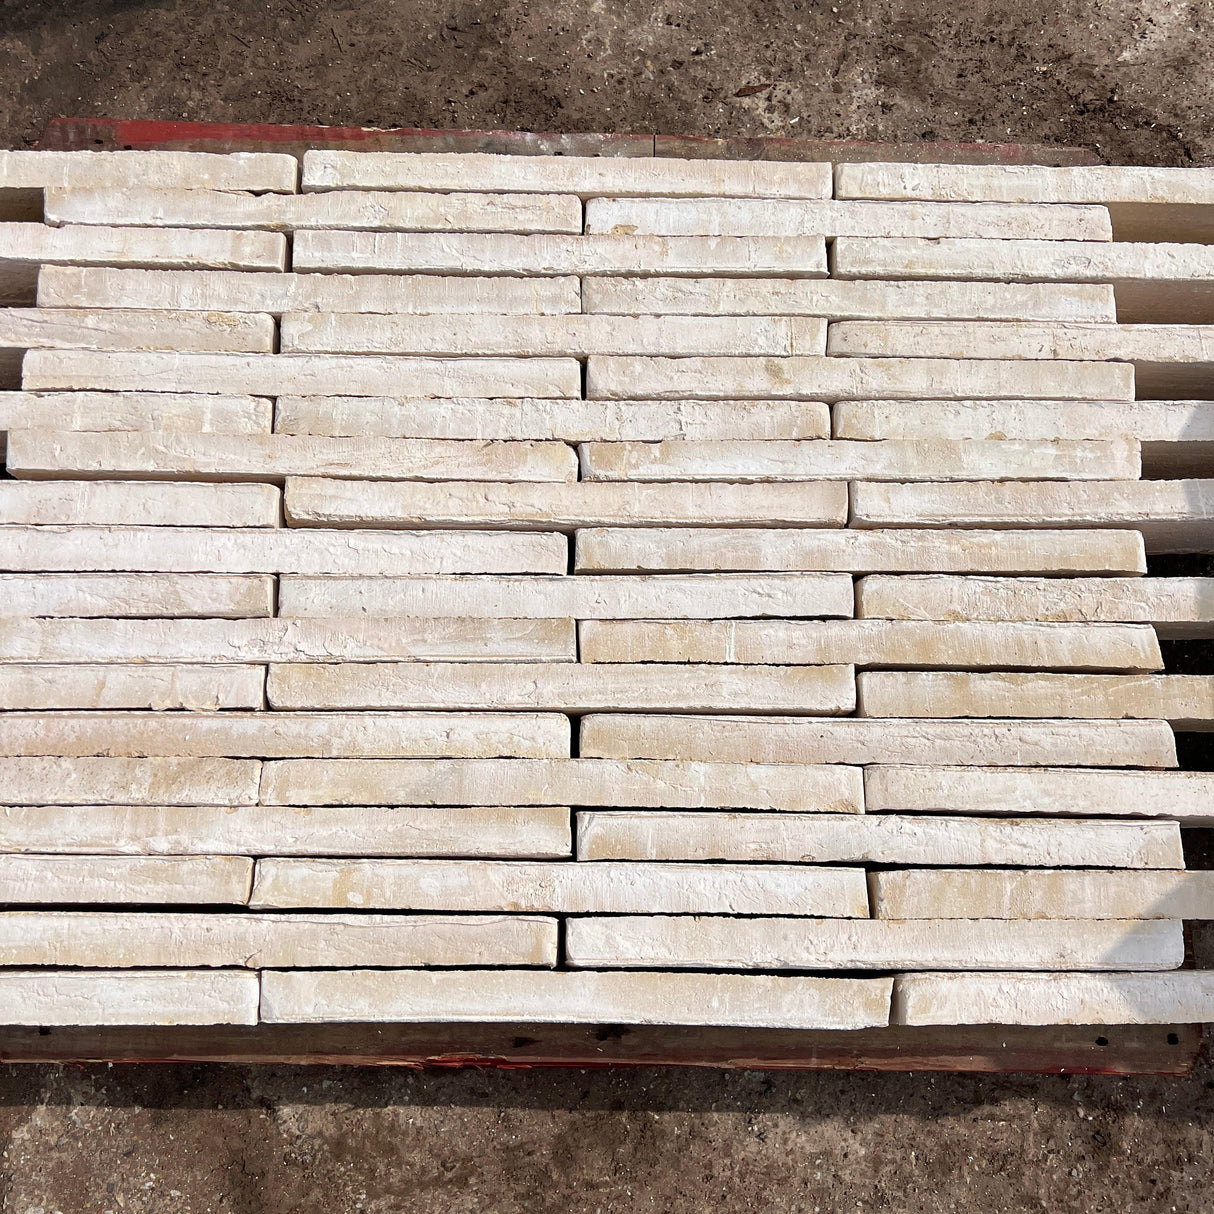 Fornace S.ANSELMO Corso Aqua White Linear Brick - 40mm x 100mm x 528mm - Reclaimed Brick Company